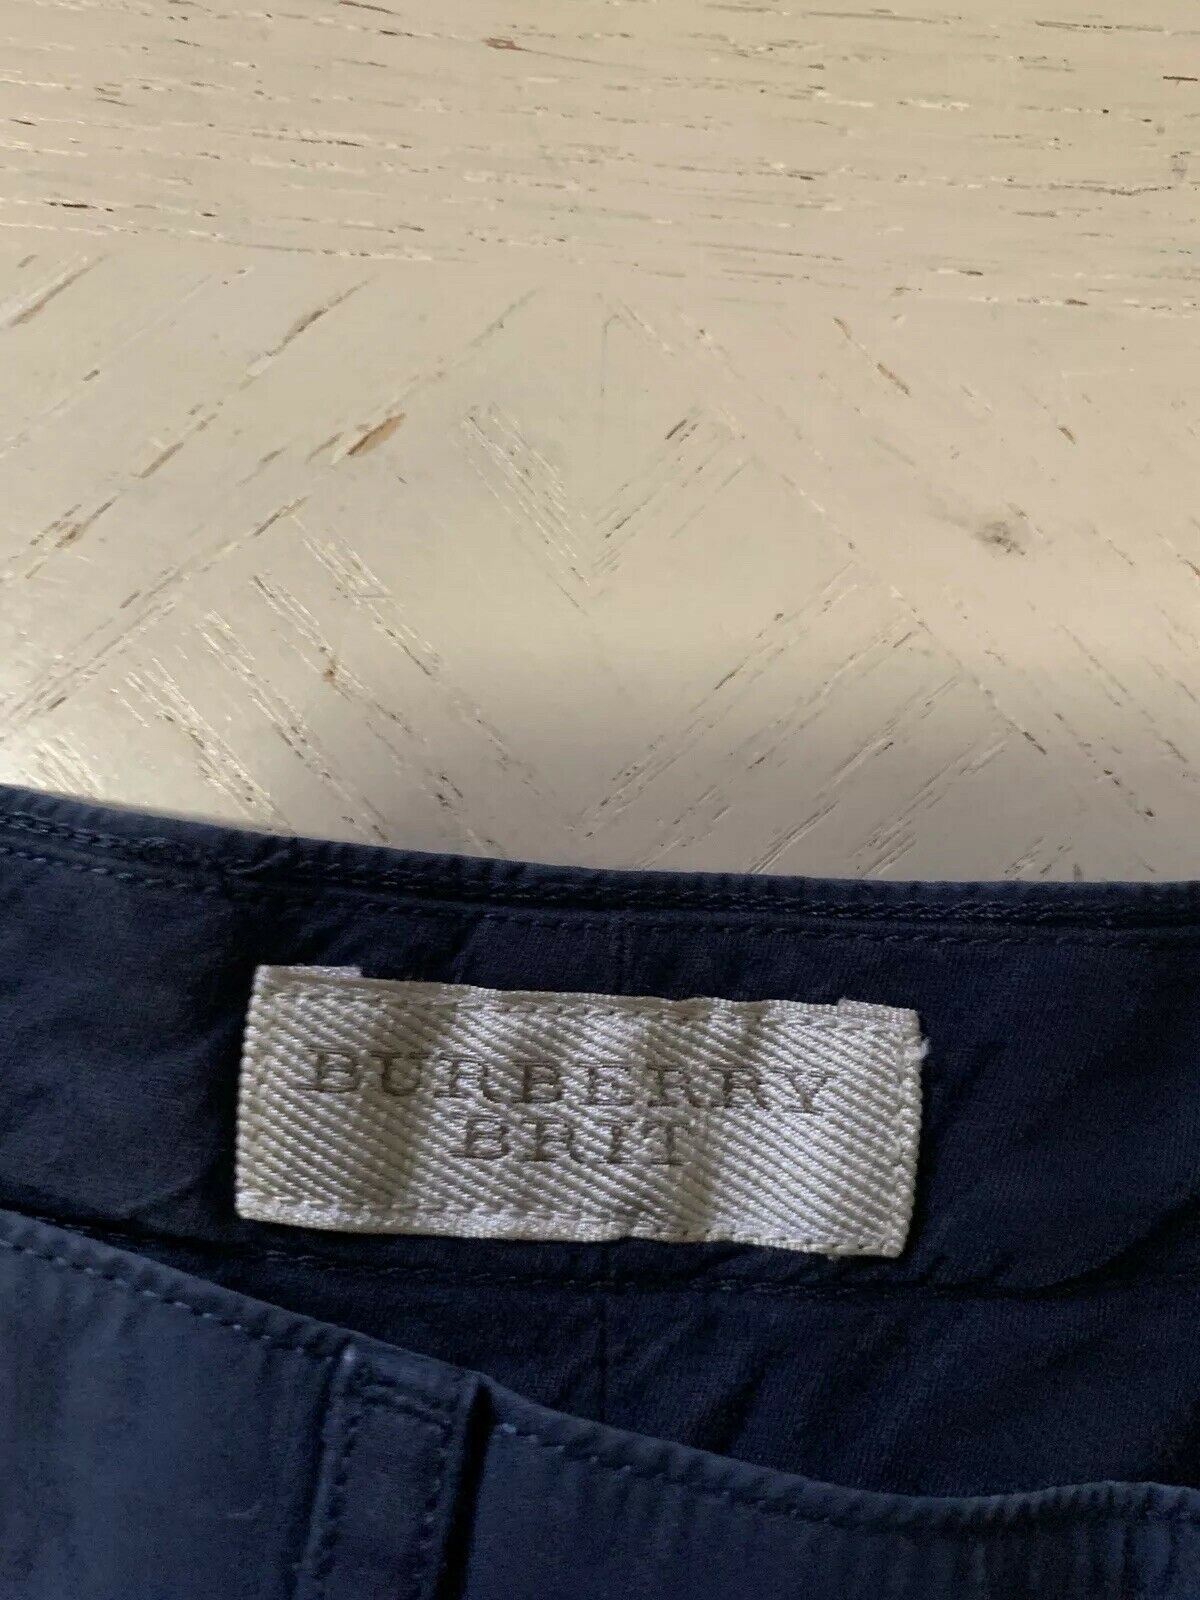 New $195 Burberry Brit Short Pants Navy Size 32